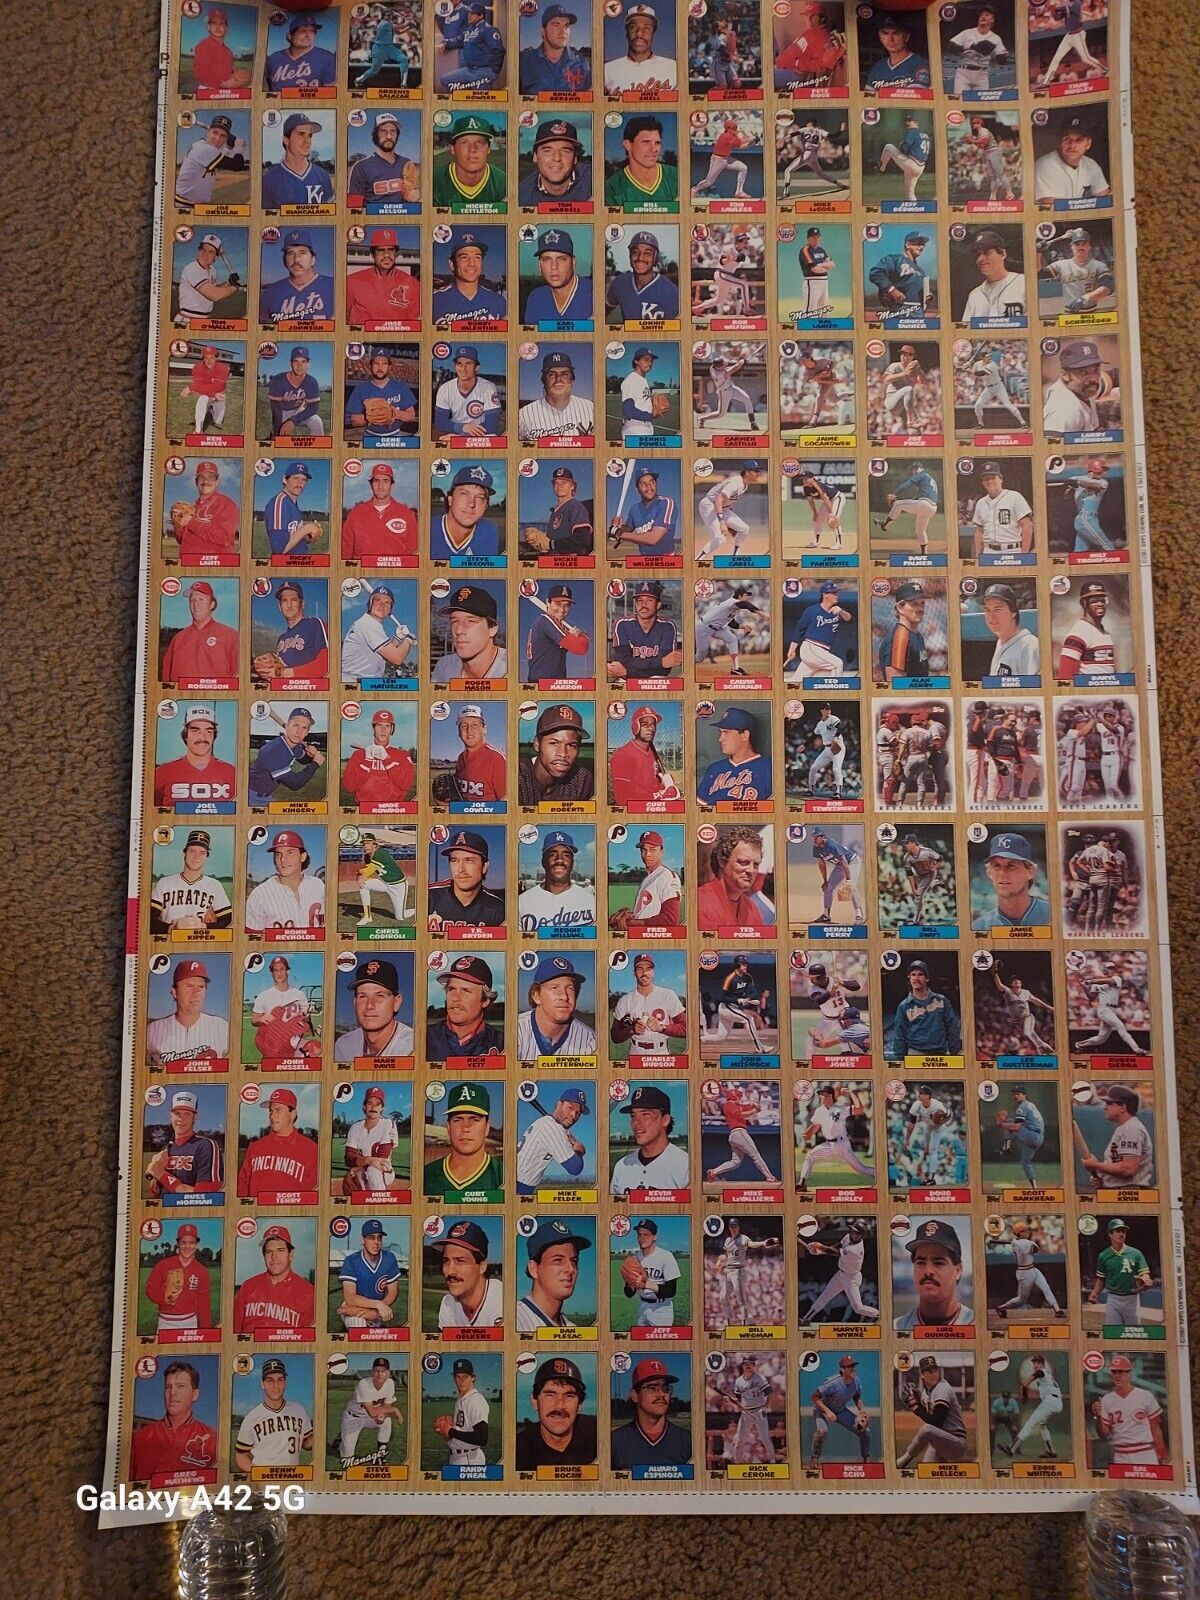 1987 Topps Uncut Sheet Of Baseball Cards, Man Cave, Wall Art, Vintage